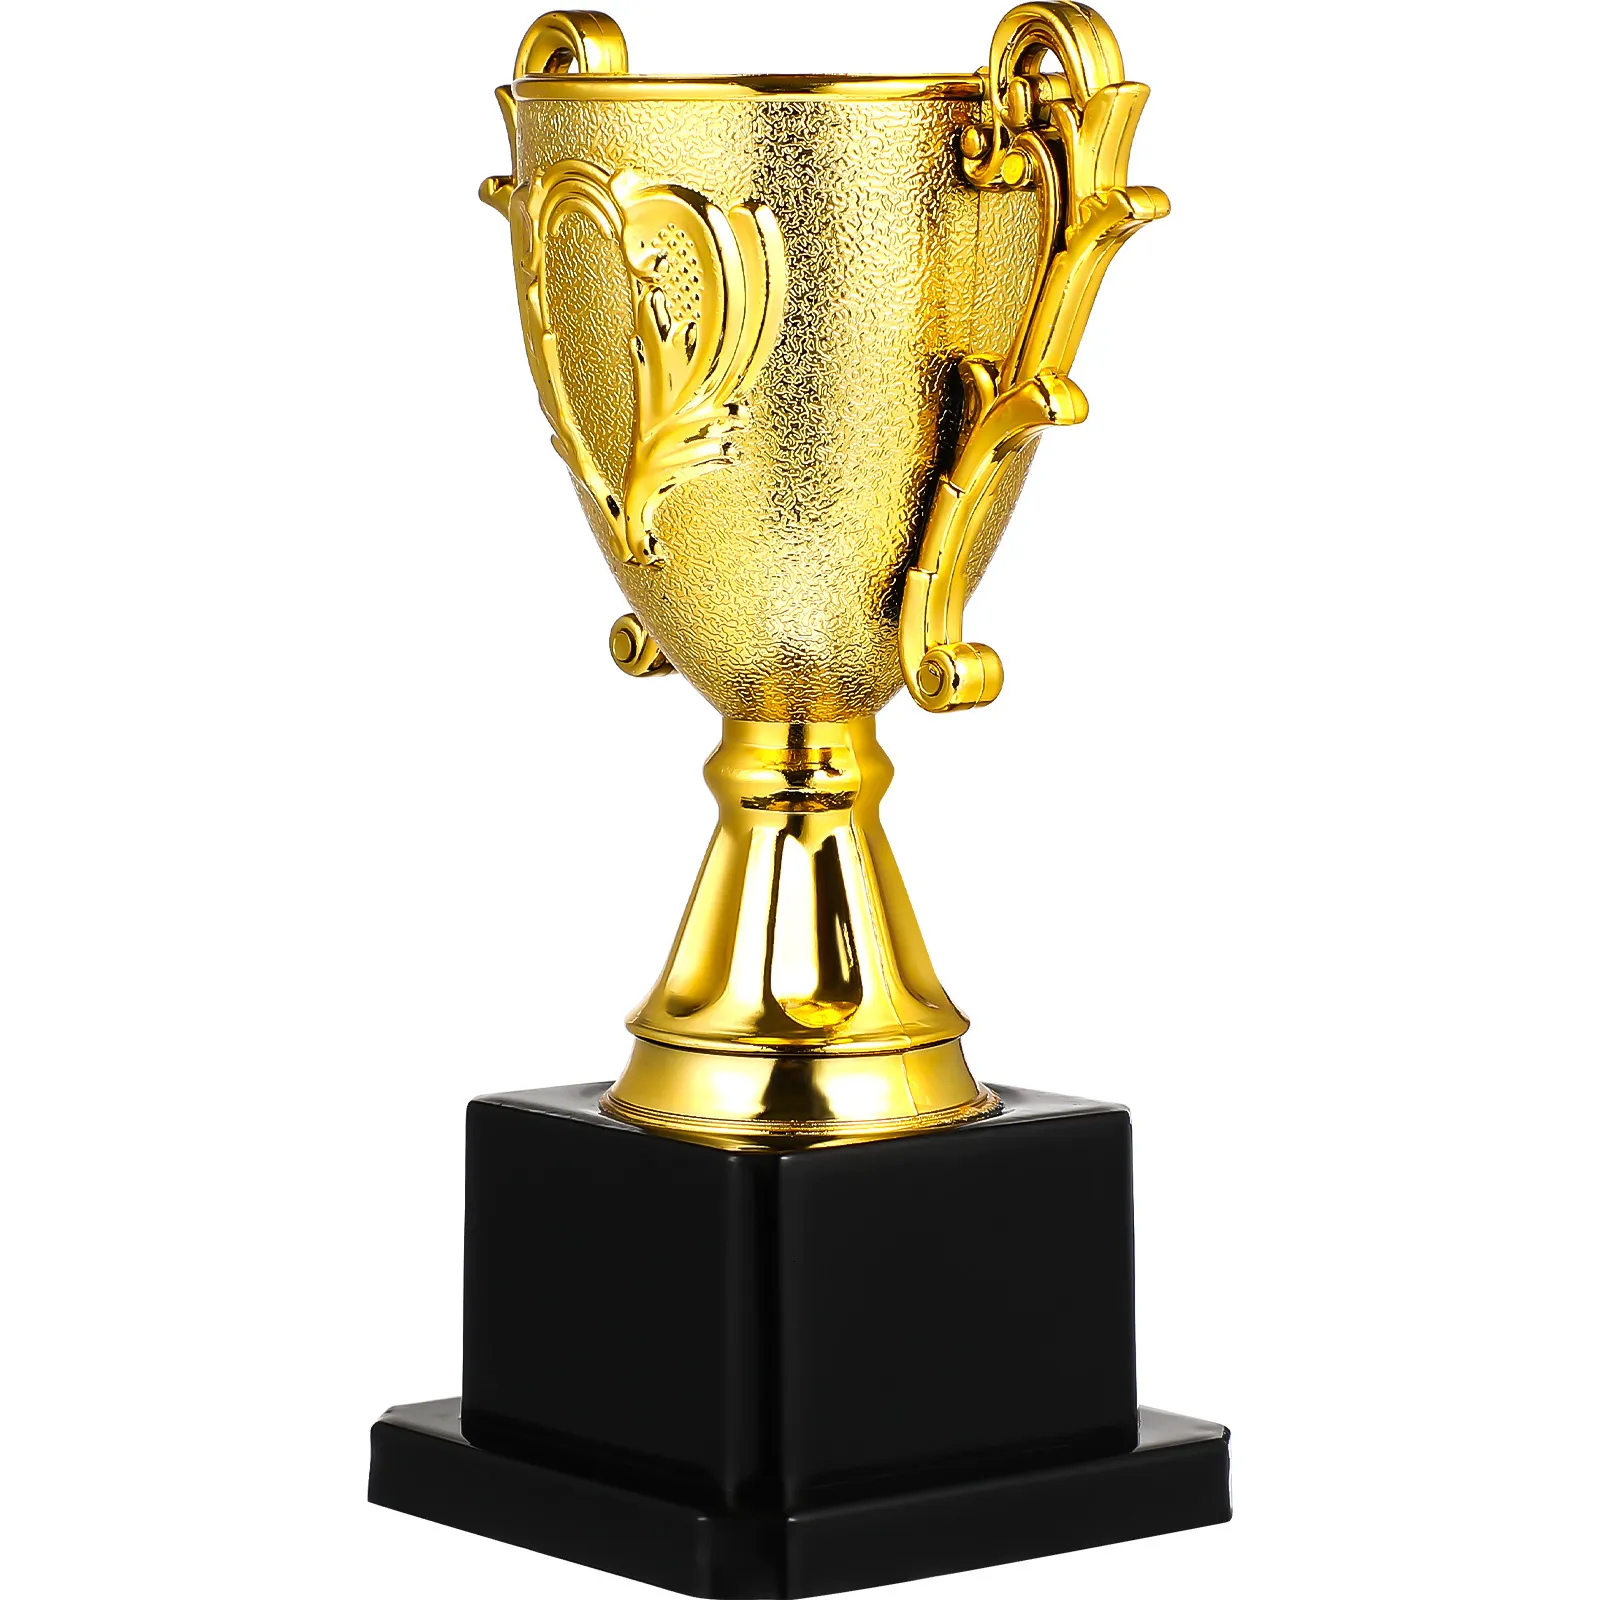 Decorative Objects Trophy Trophies Award Plastic Gold Kids Awards Cup Mini Cups Winner Children Reward Funny Trophytrophy Medals Soccer Toy Golden 230815